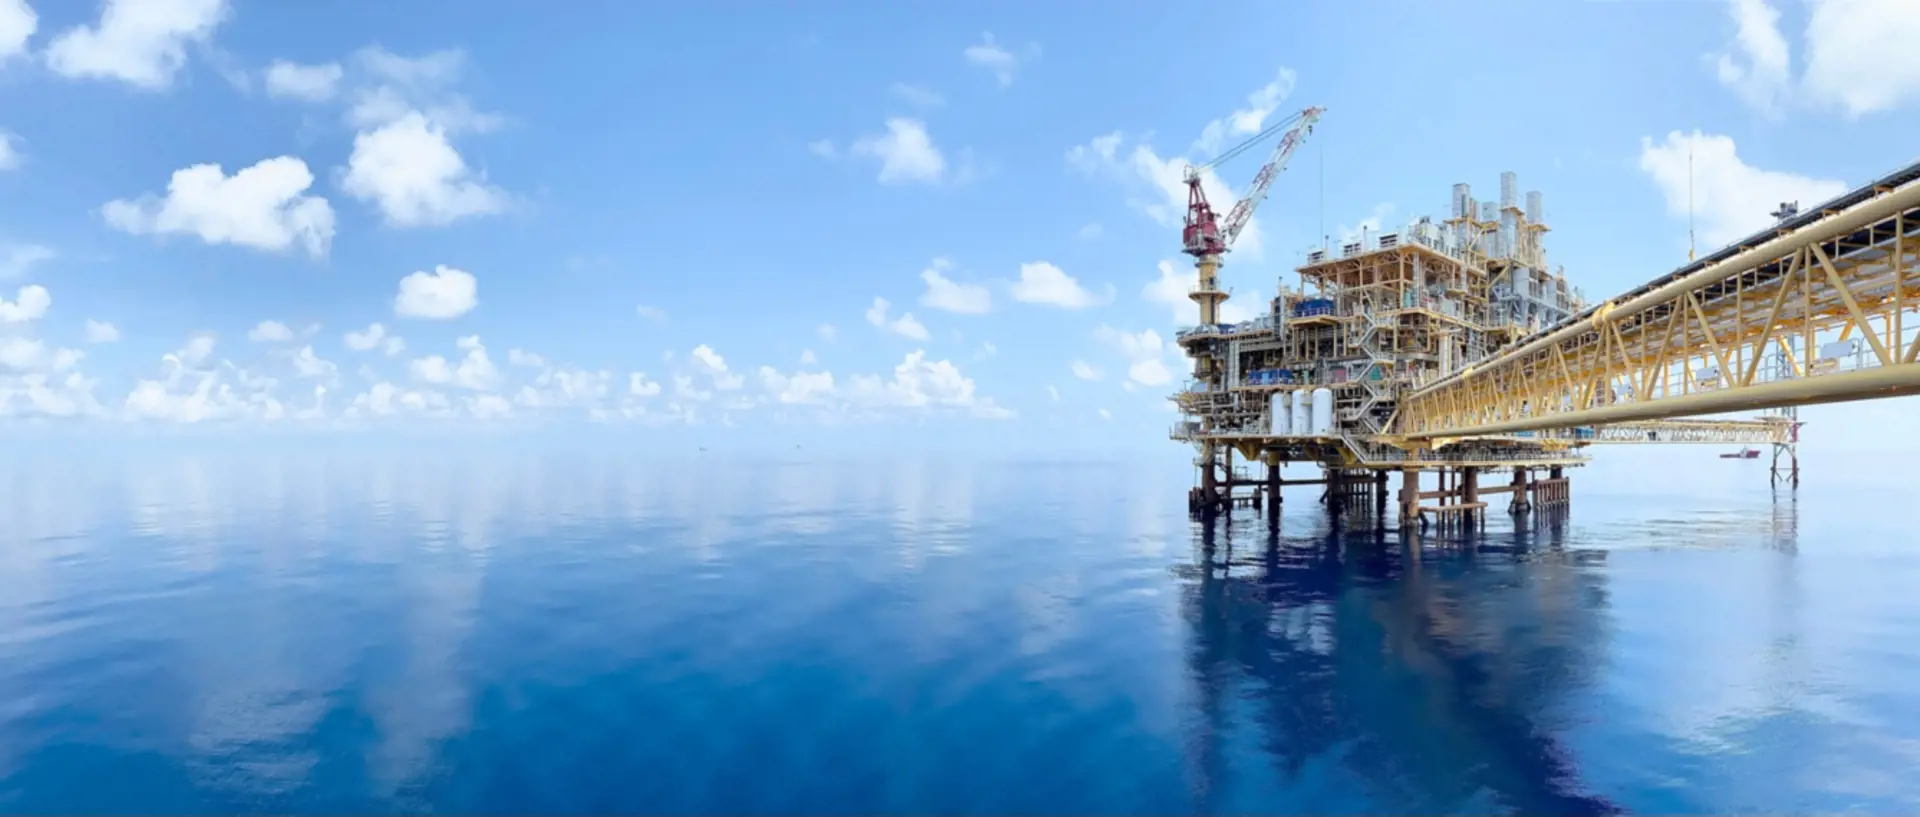 Oil gas processing platform in the ocean